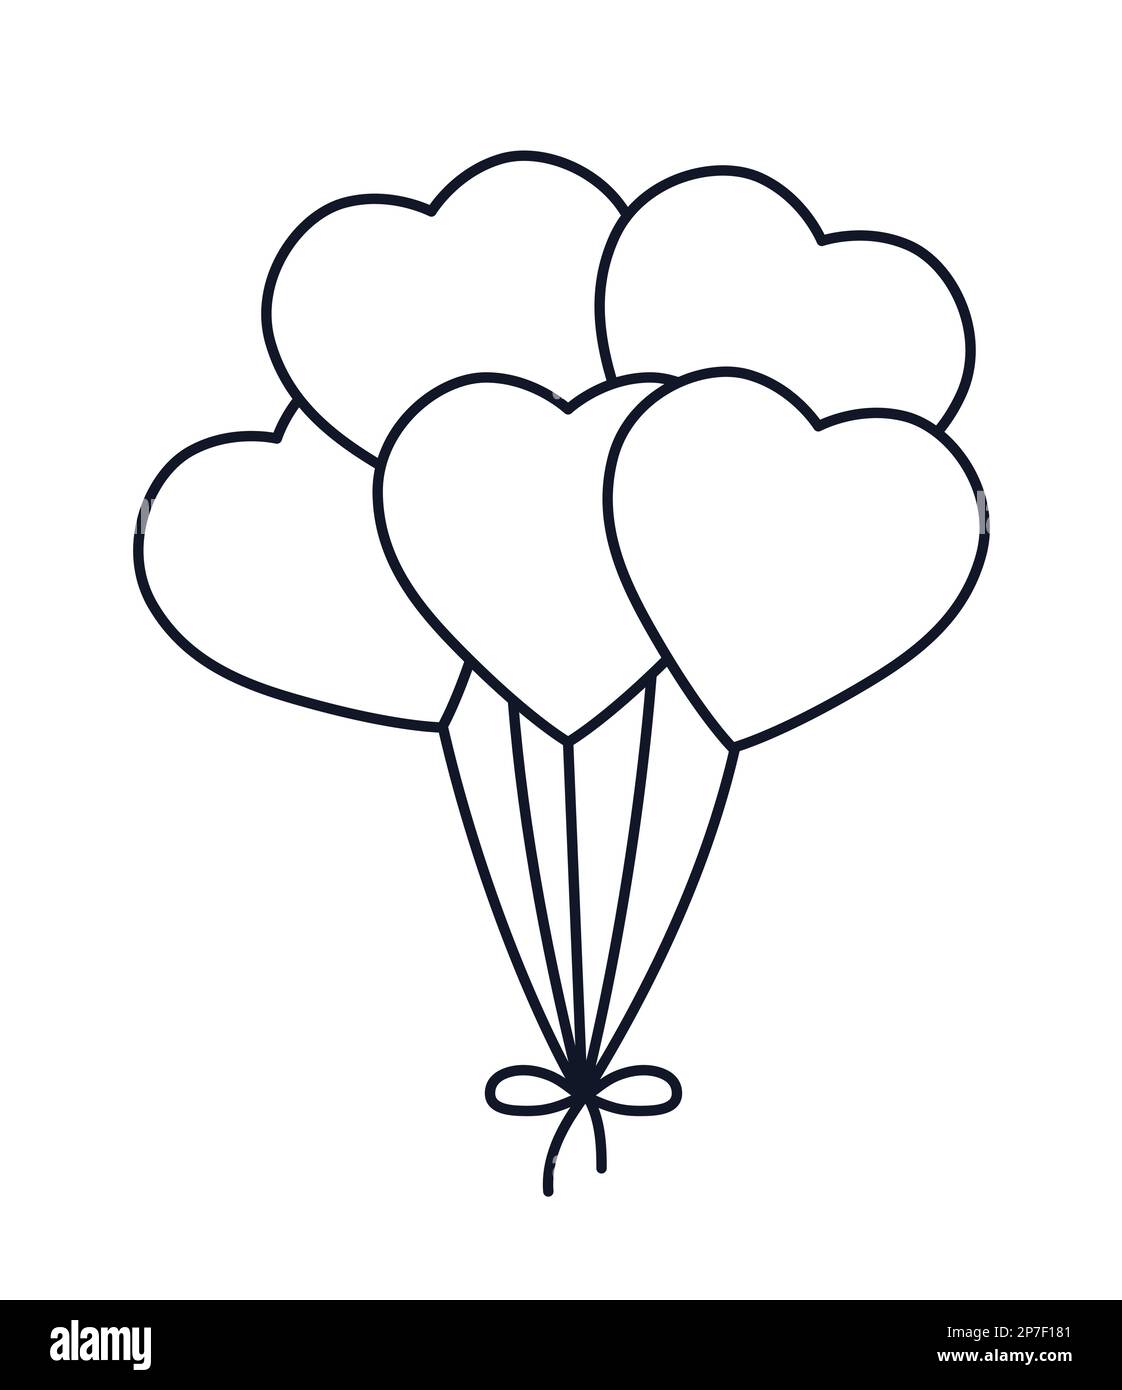 Bunch of heart shaped balloons vector icon Stock Vector